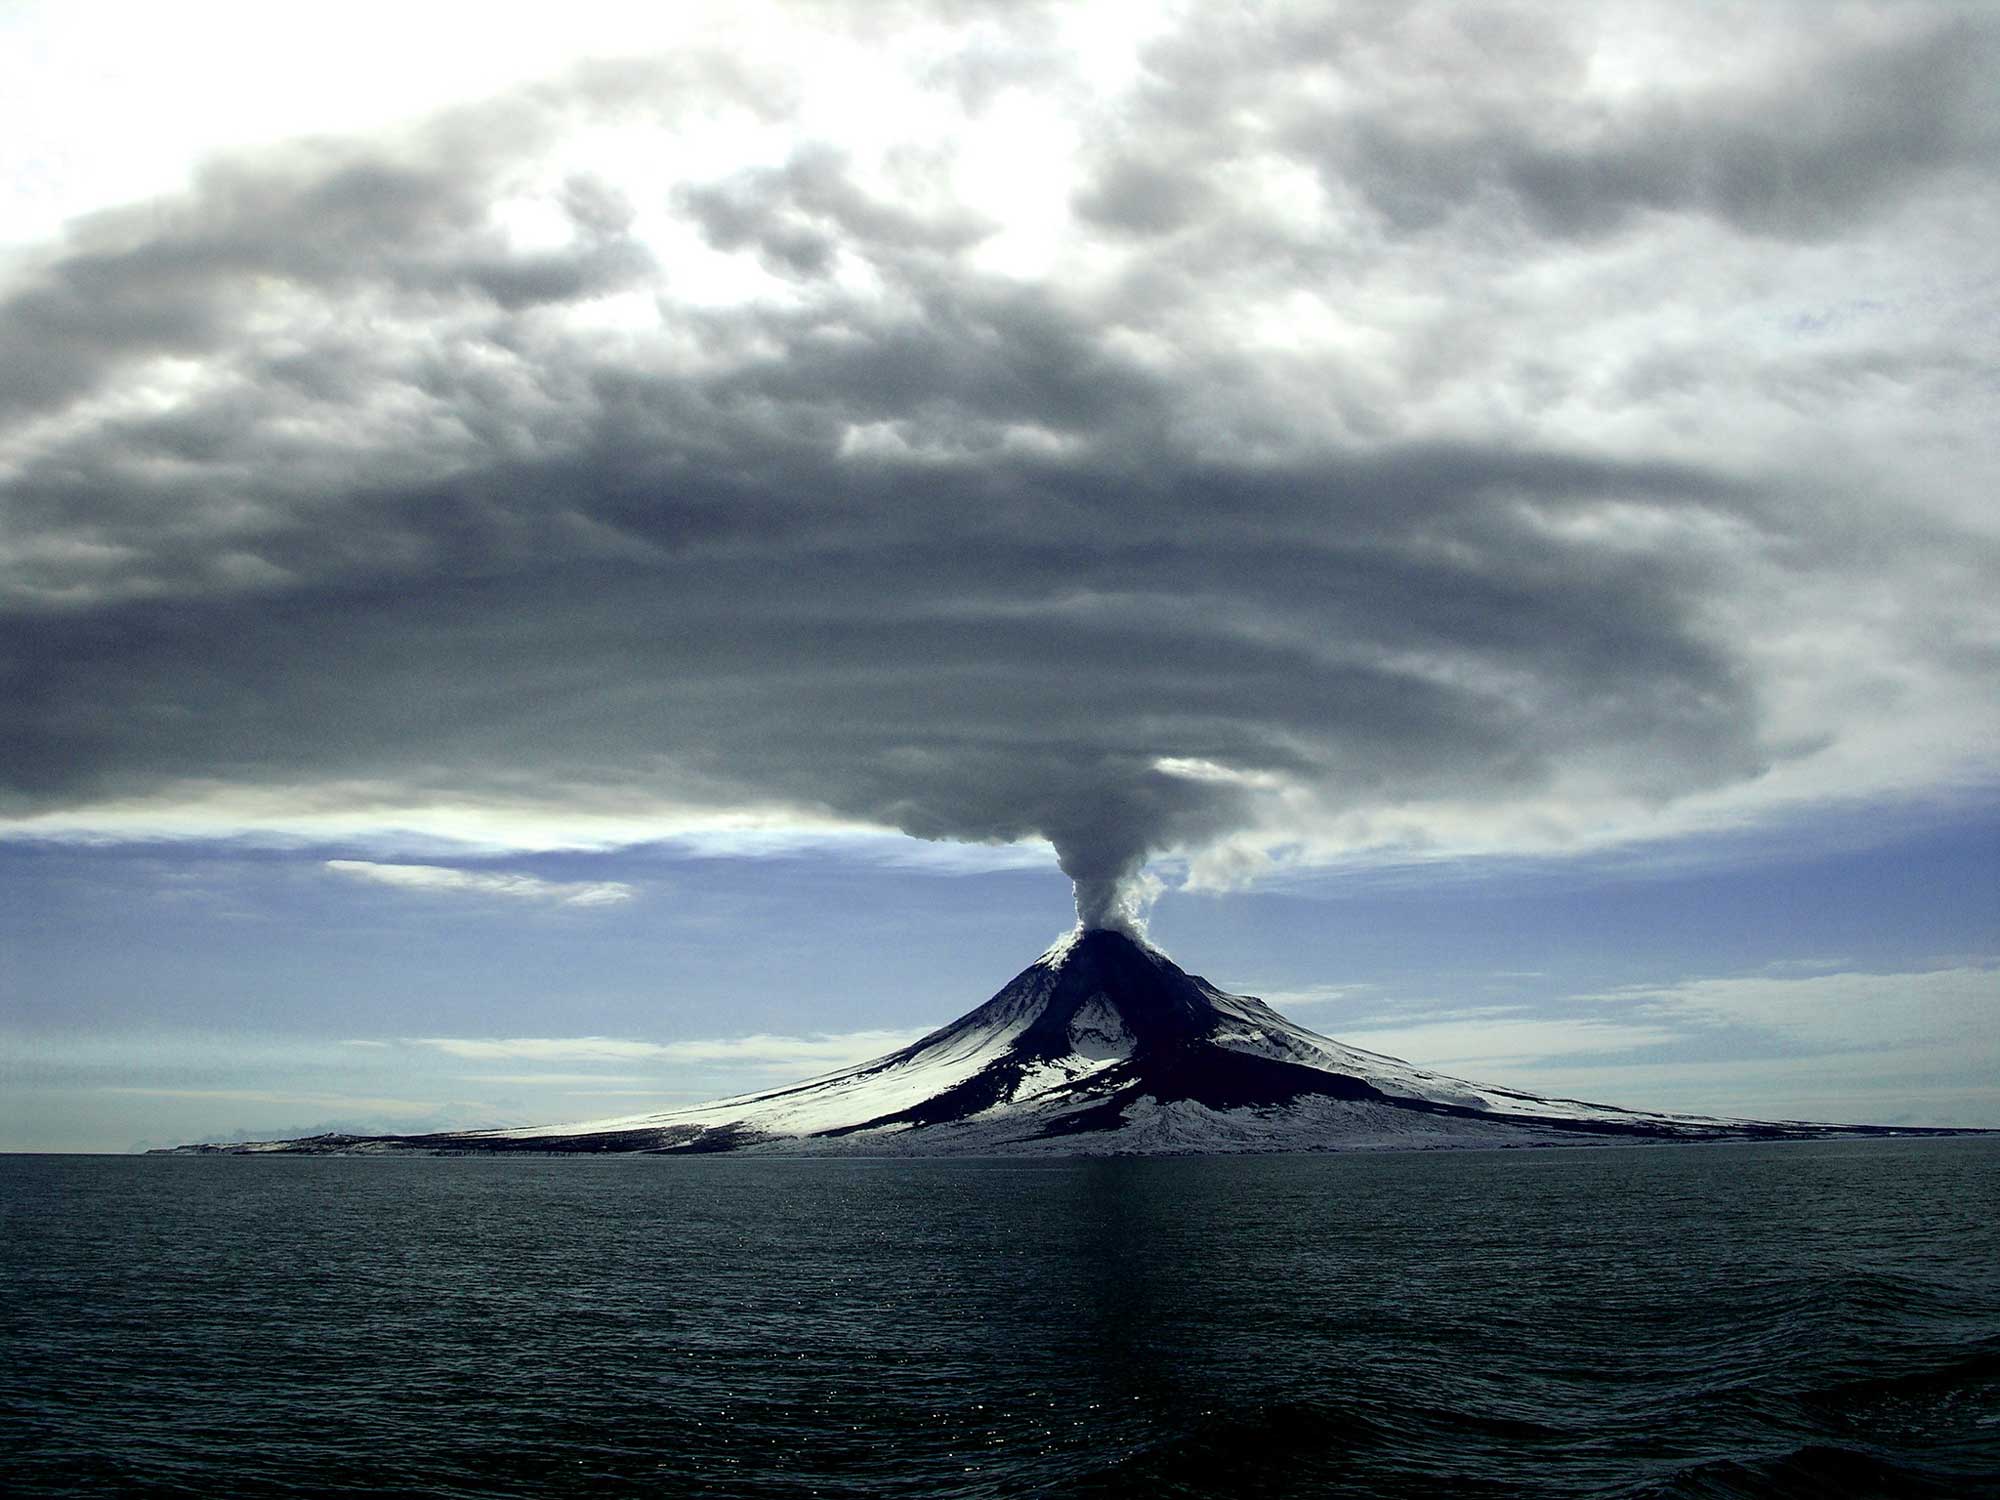 Photograph of Augustine Volcano erupting in Alaska.